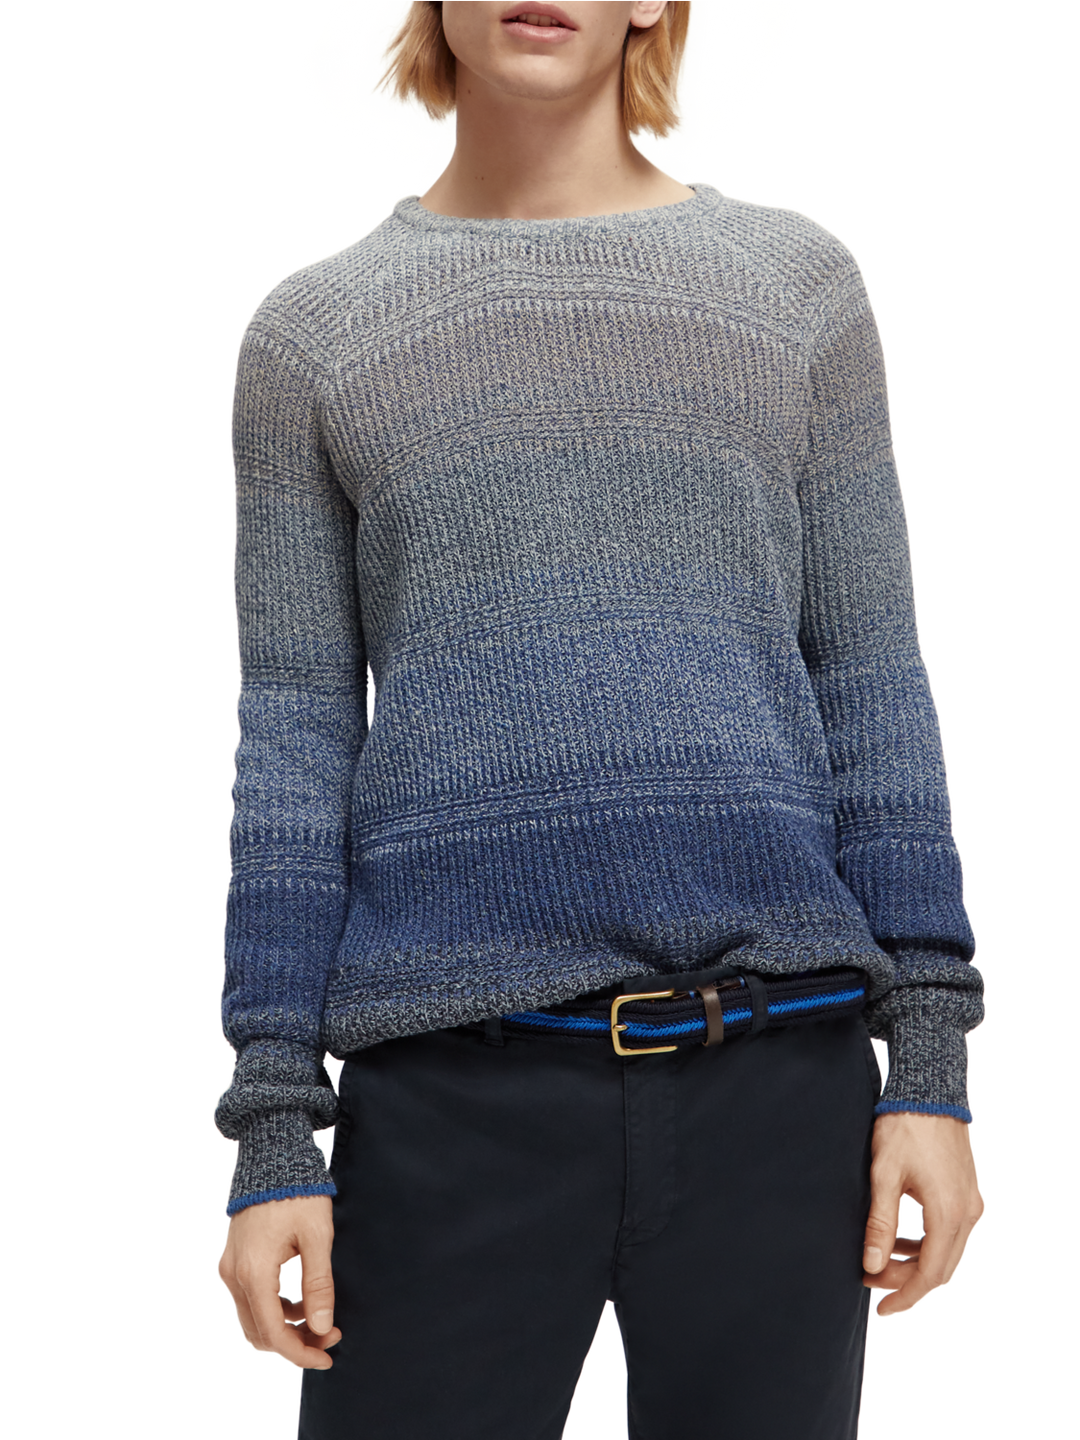 Eternal Blauw Knitted Crewneck in Indigo Stripe | Buster McGee